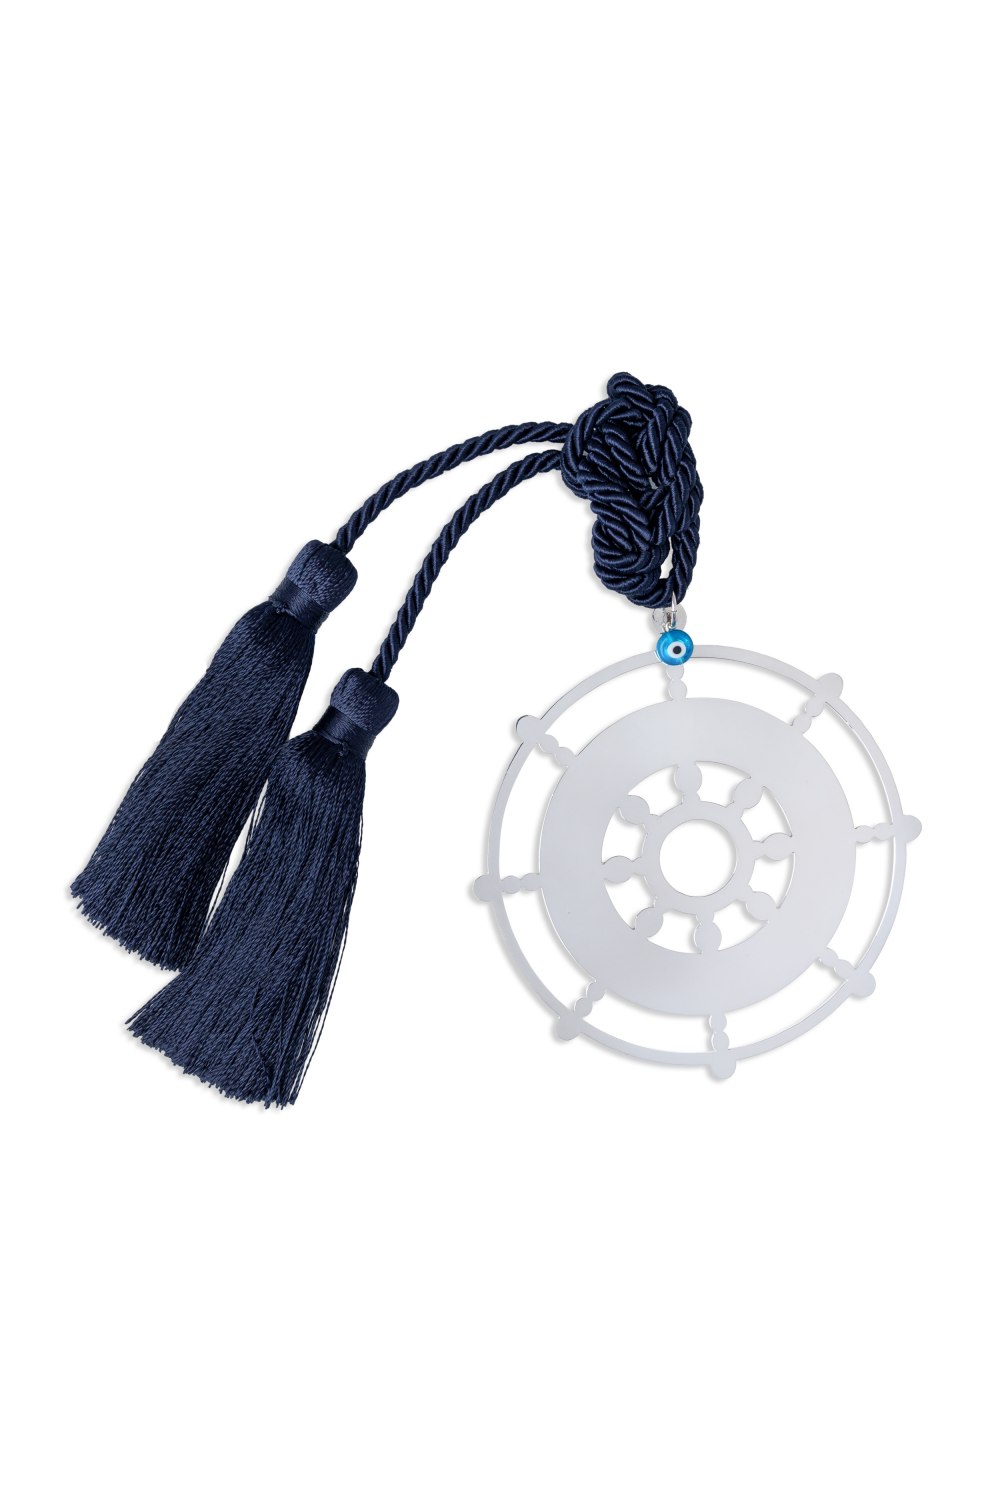 KESSARIS - Ship's Wheel Blue Tassels Decorative